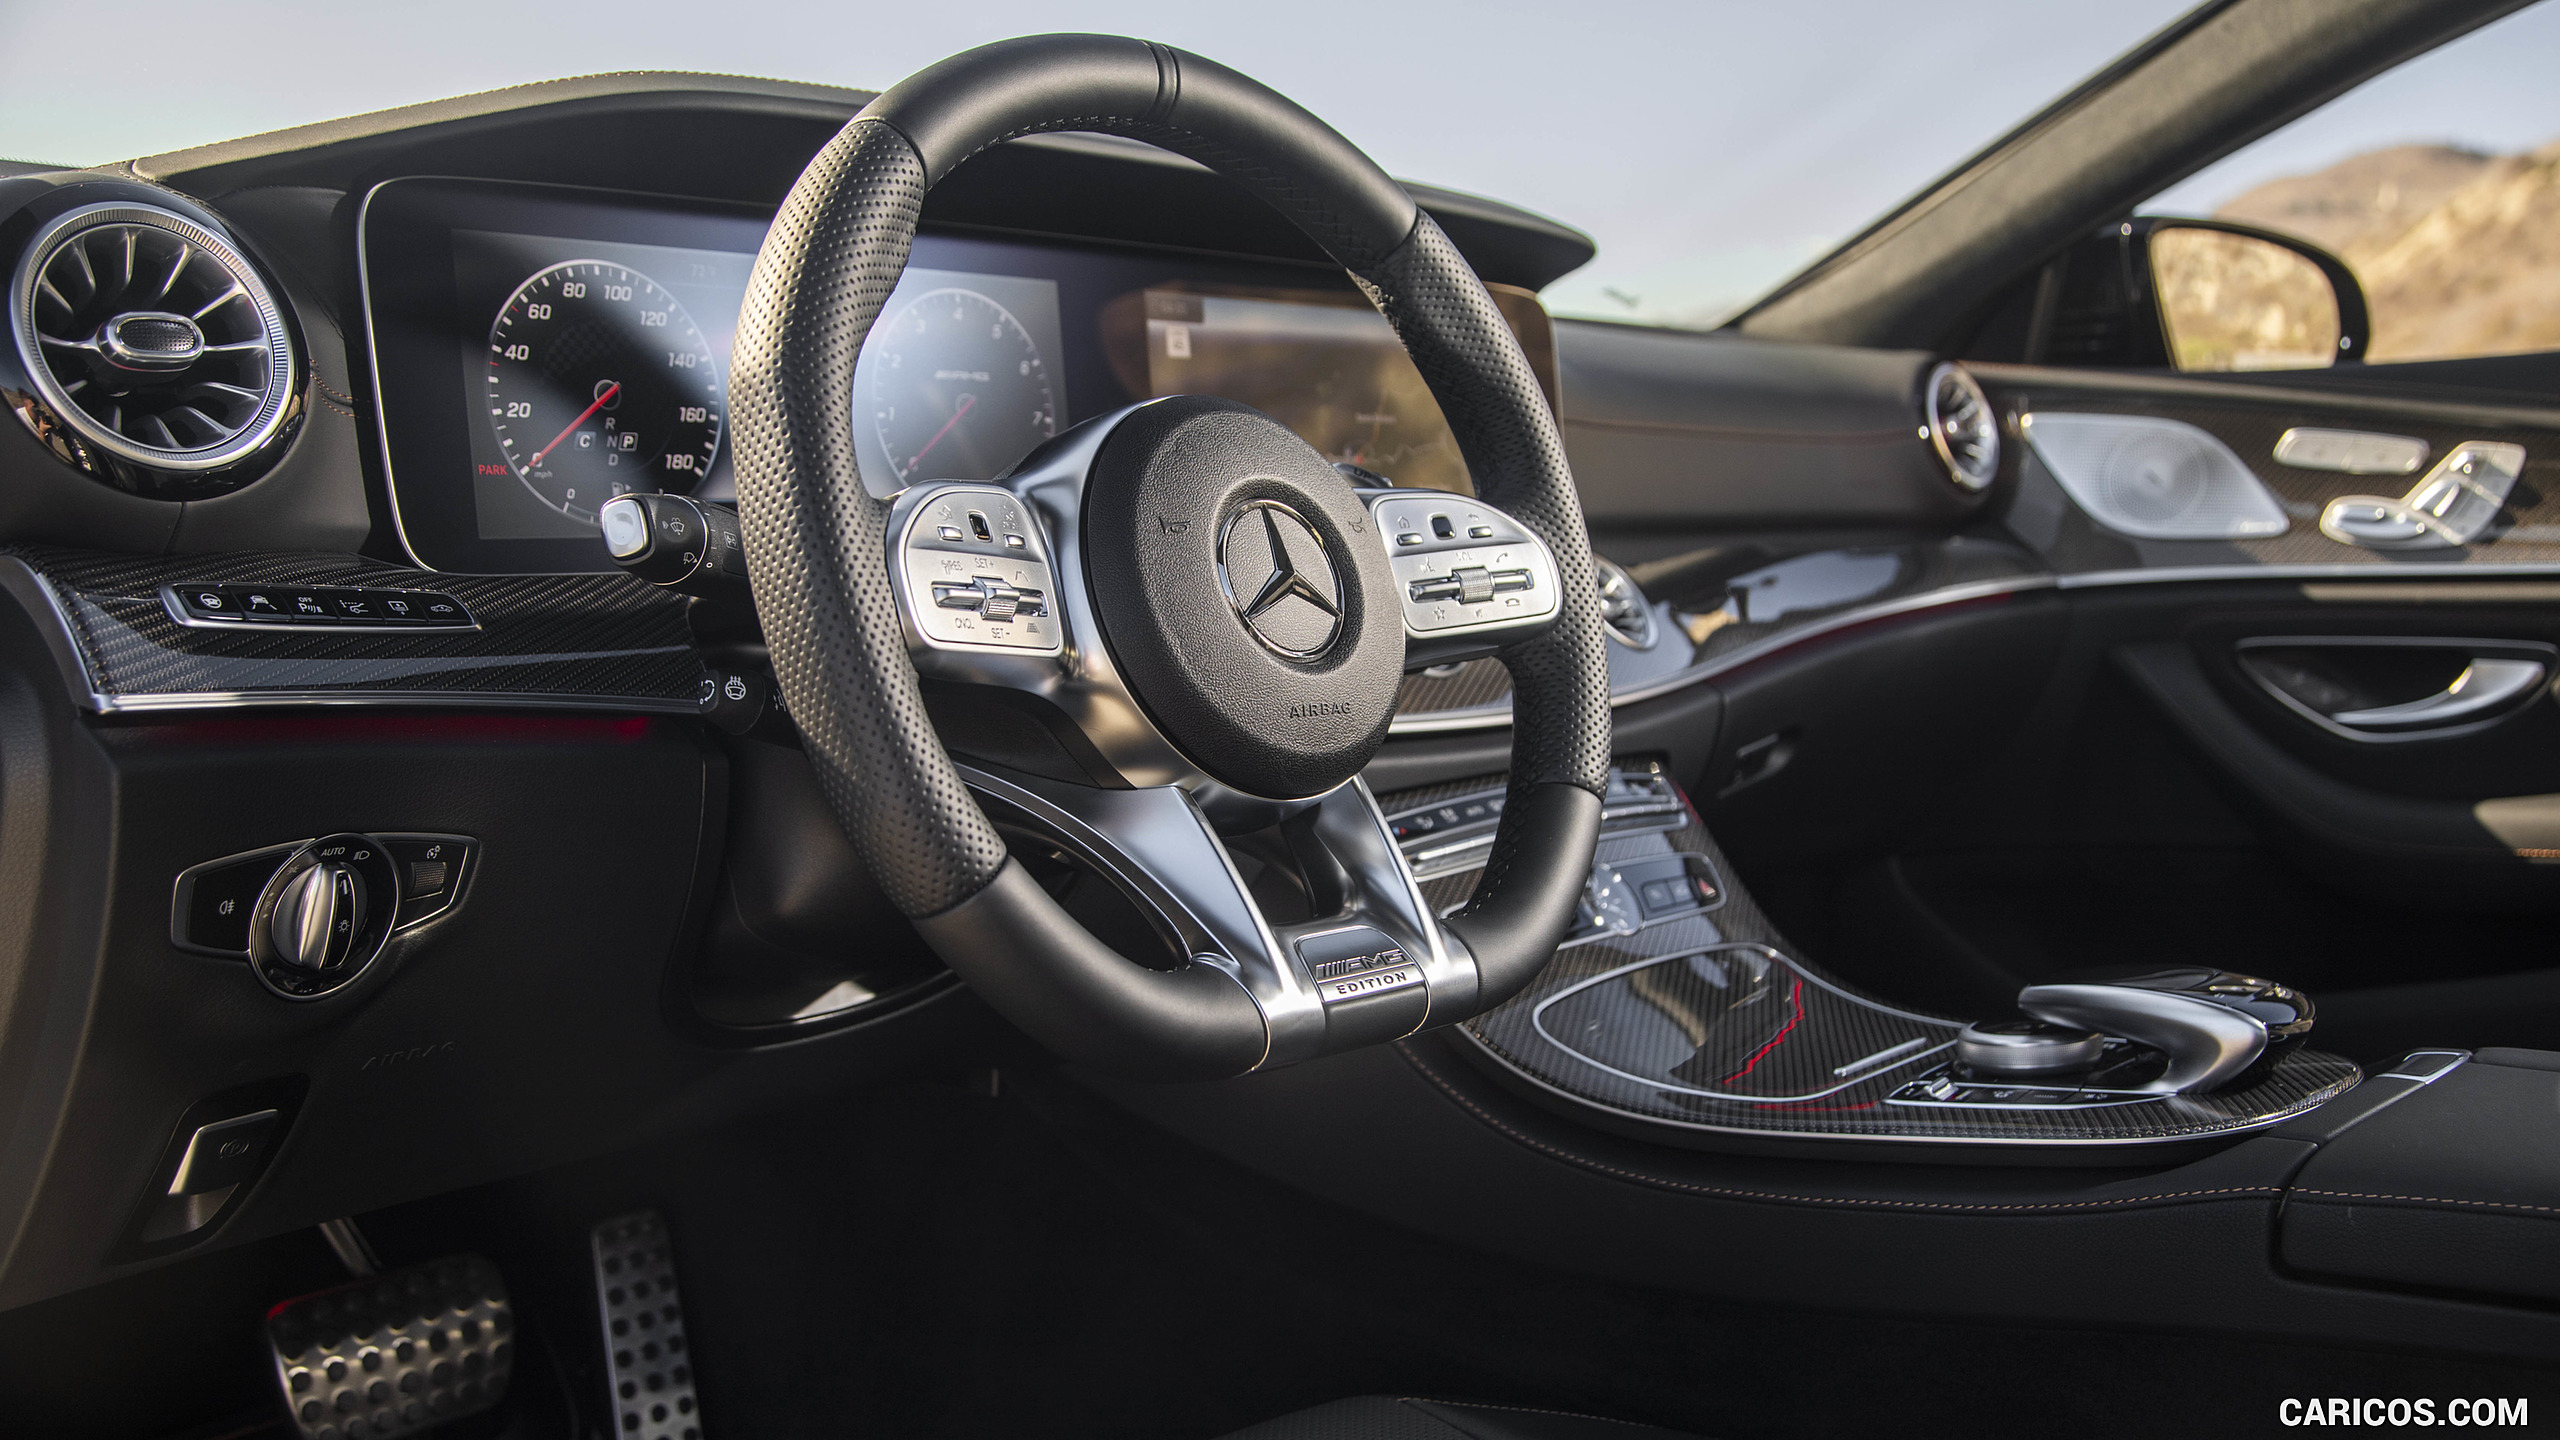 2019 Mercedes-AMG CLS 53 4MATIC+ (US-Spec) - Interior, #67 of 84